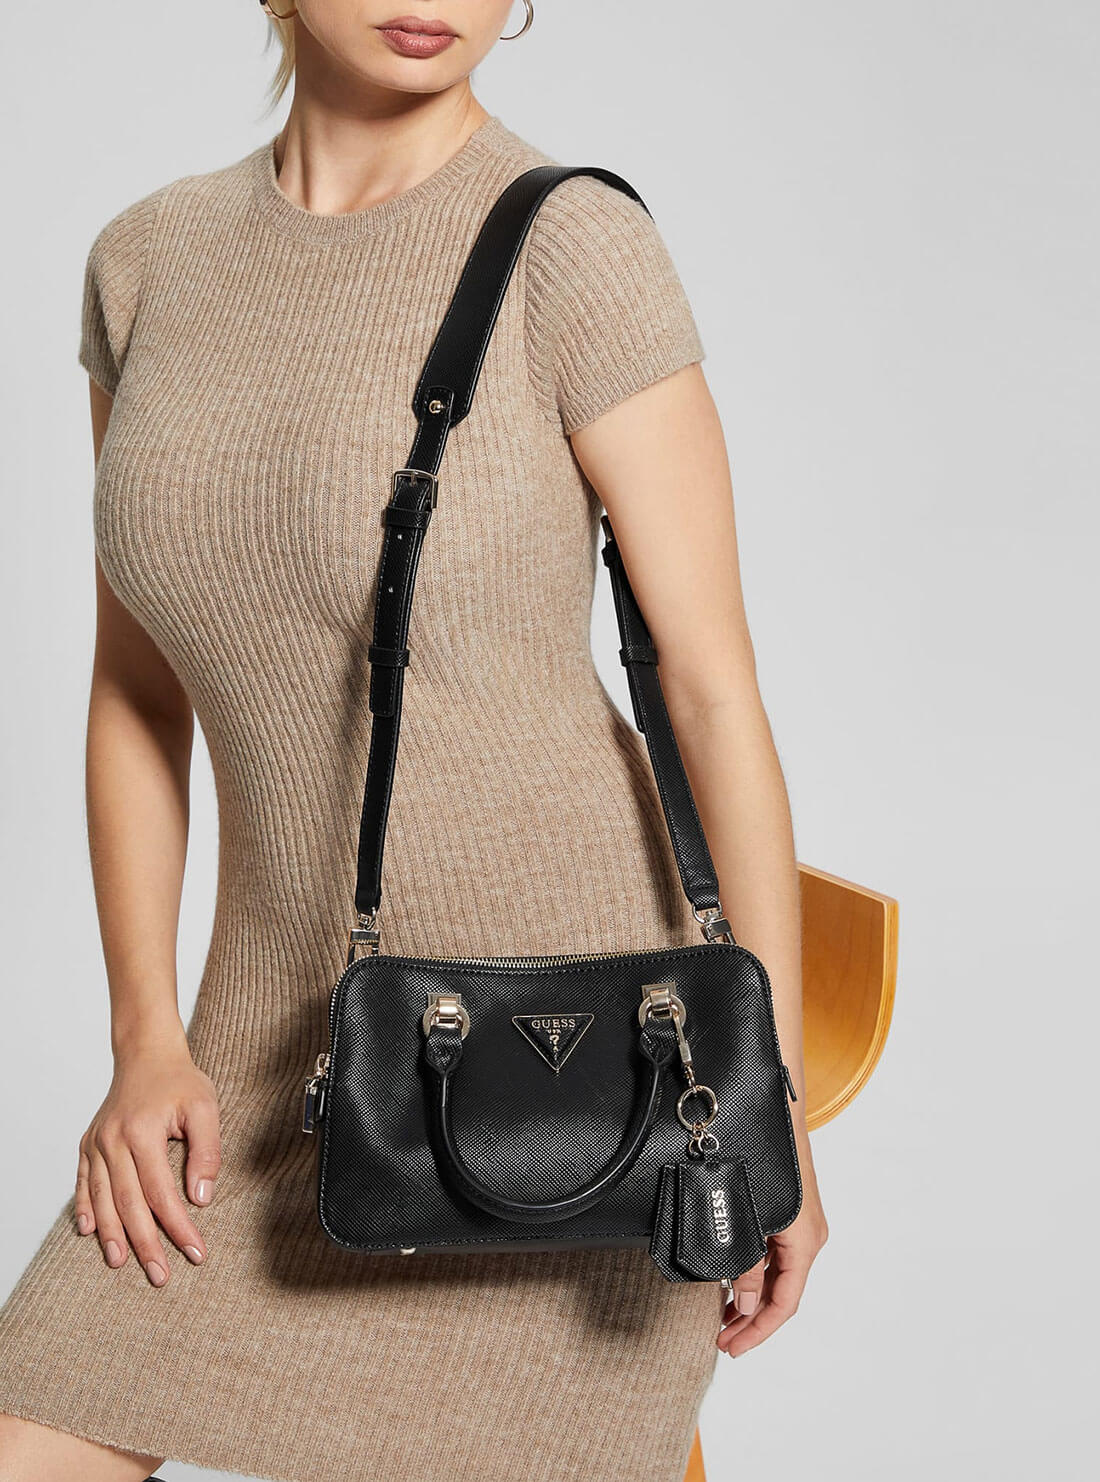 Women's Black Brynlee Small Status Satchel Bag model view